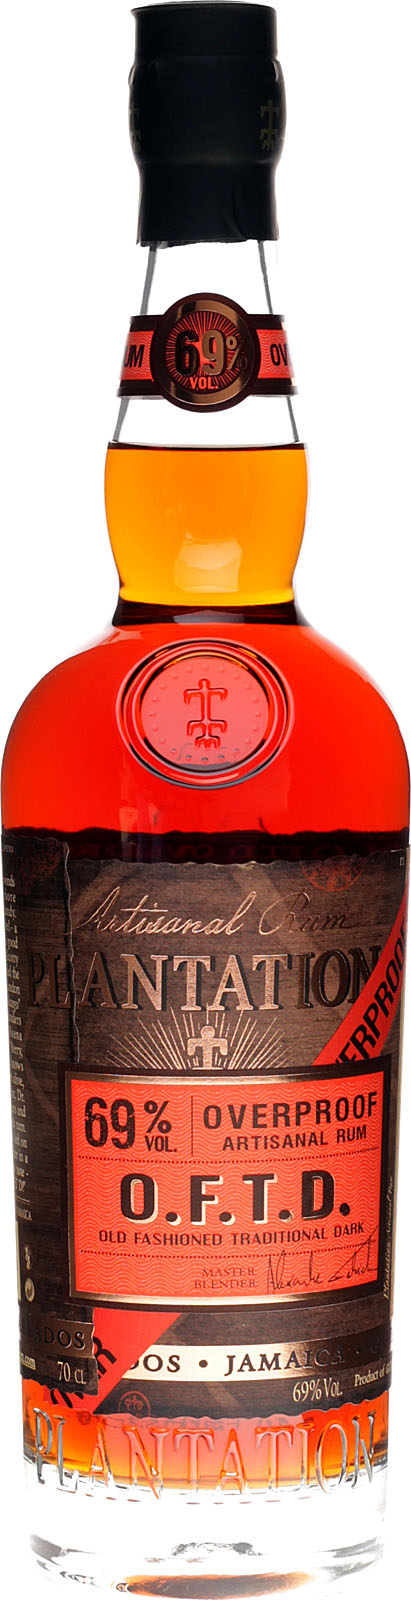 der Plantation aus O.F.T.D. Karibik Overproof Rum